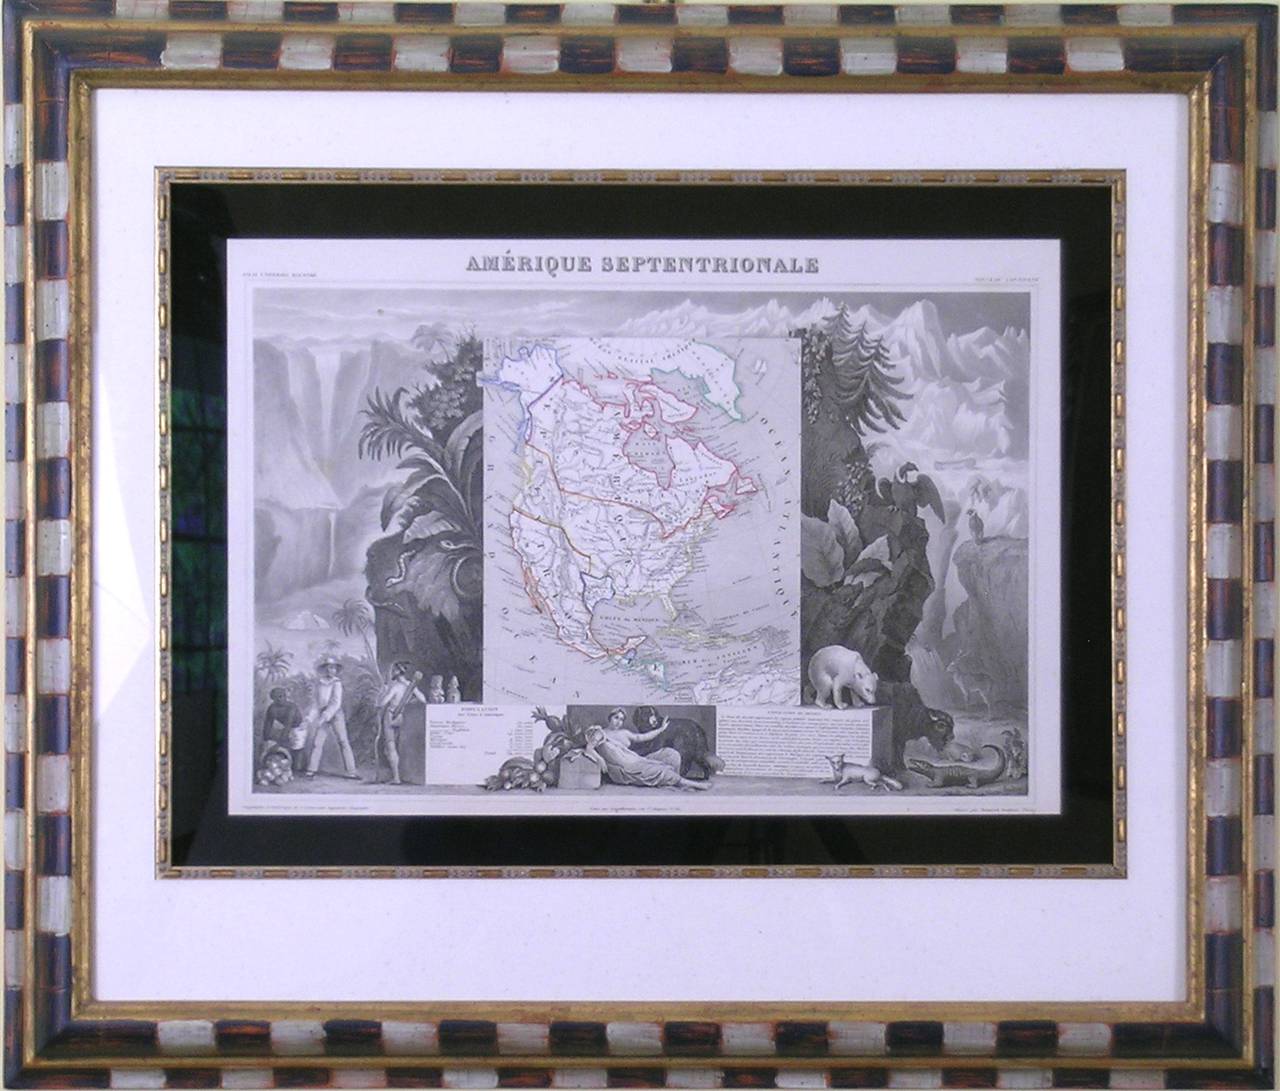 Amerique Septentrionale - Print by Victor Levasseur